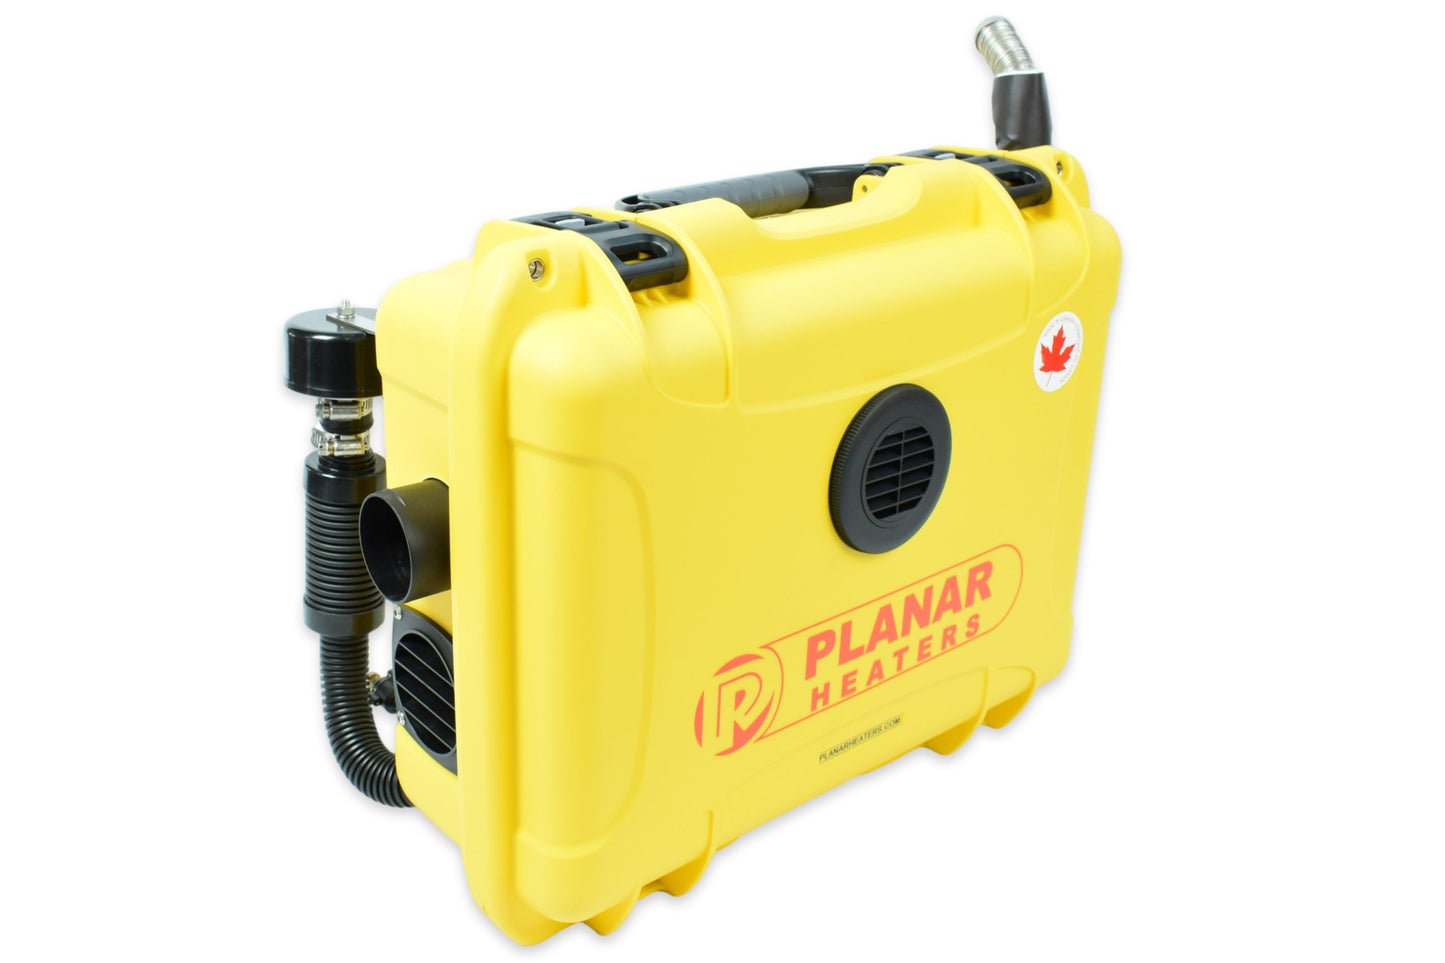 Planar Portable Diesel/Kerosene Heater 4D